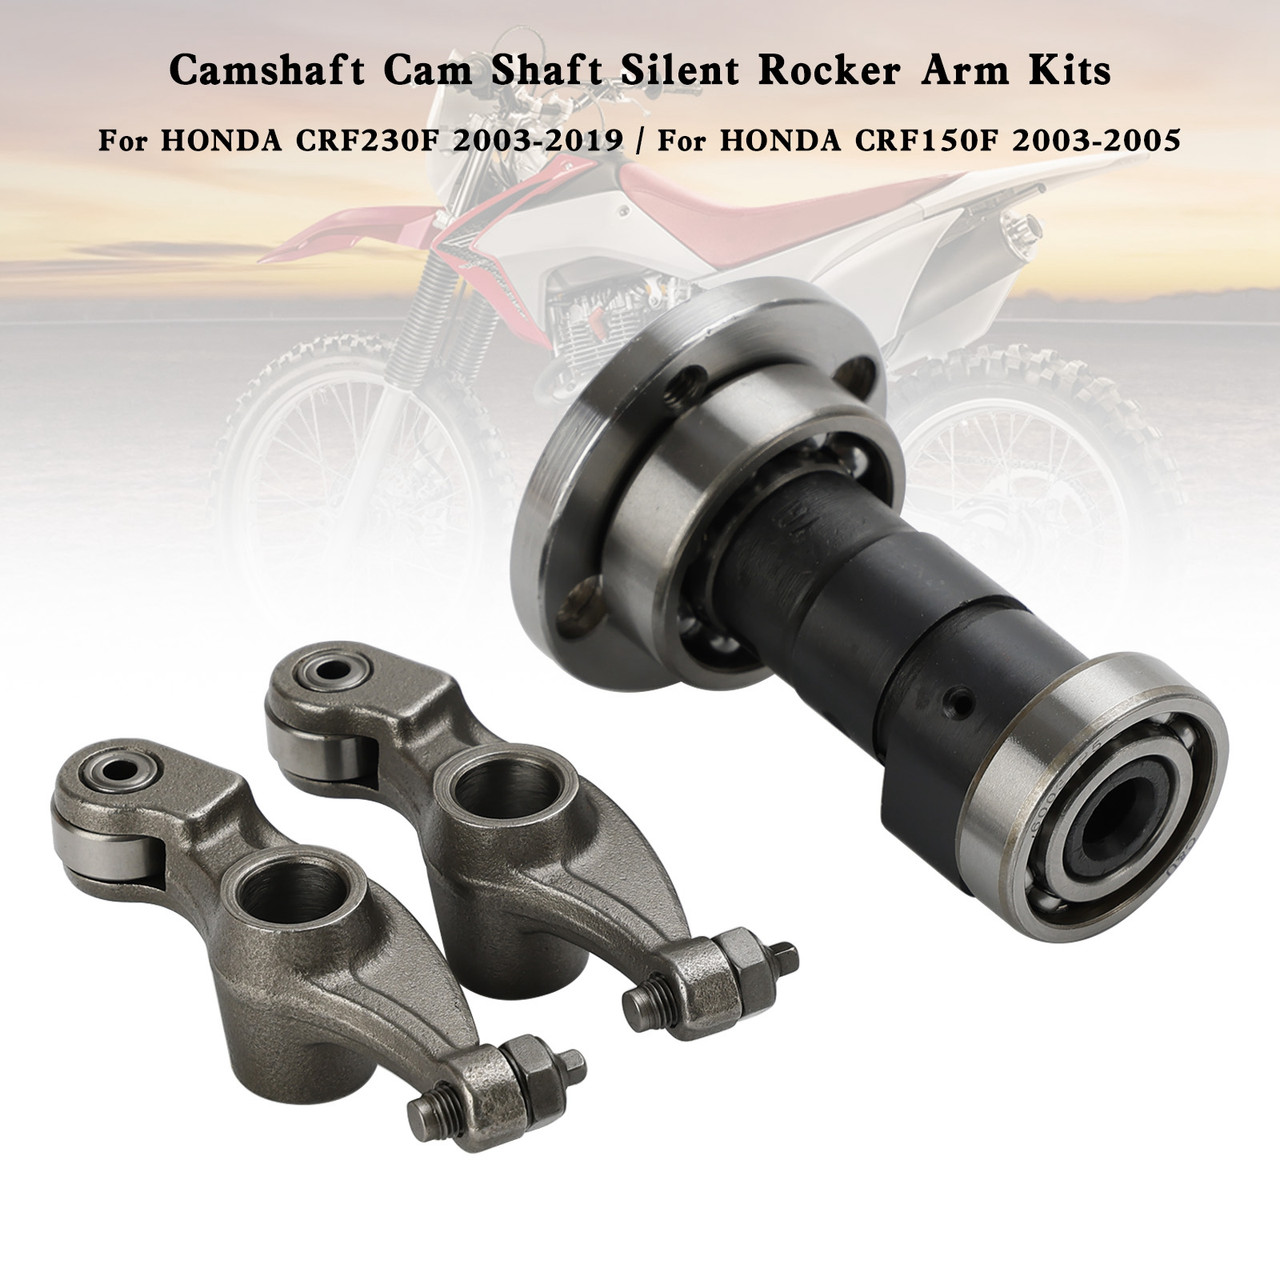 Camshaft Cam Shaft Silent Rocker Arm Kits for Honda CRF150F CRF230F 2003-2019